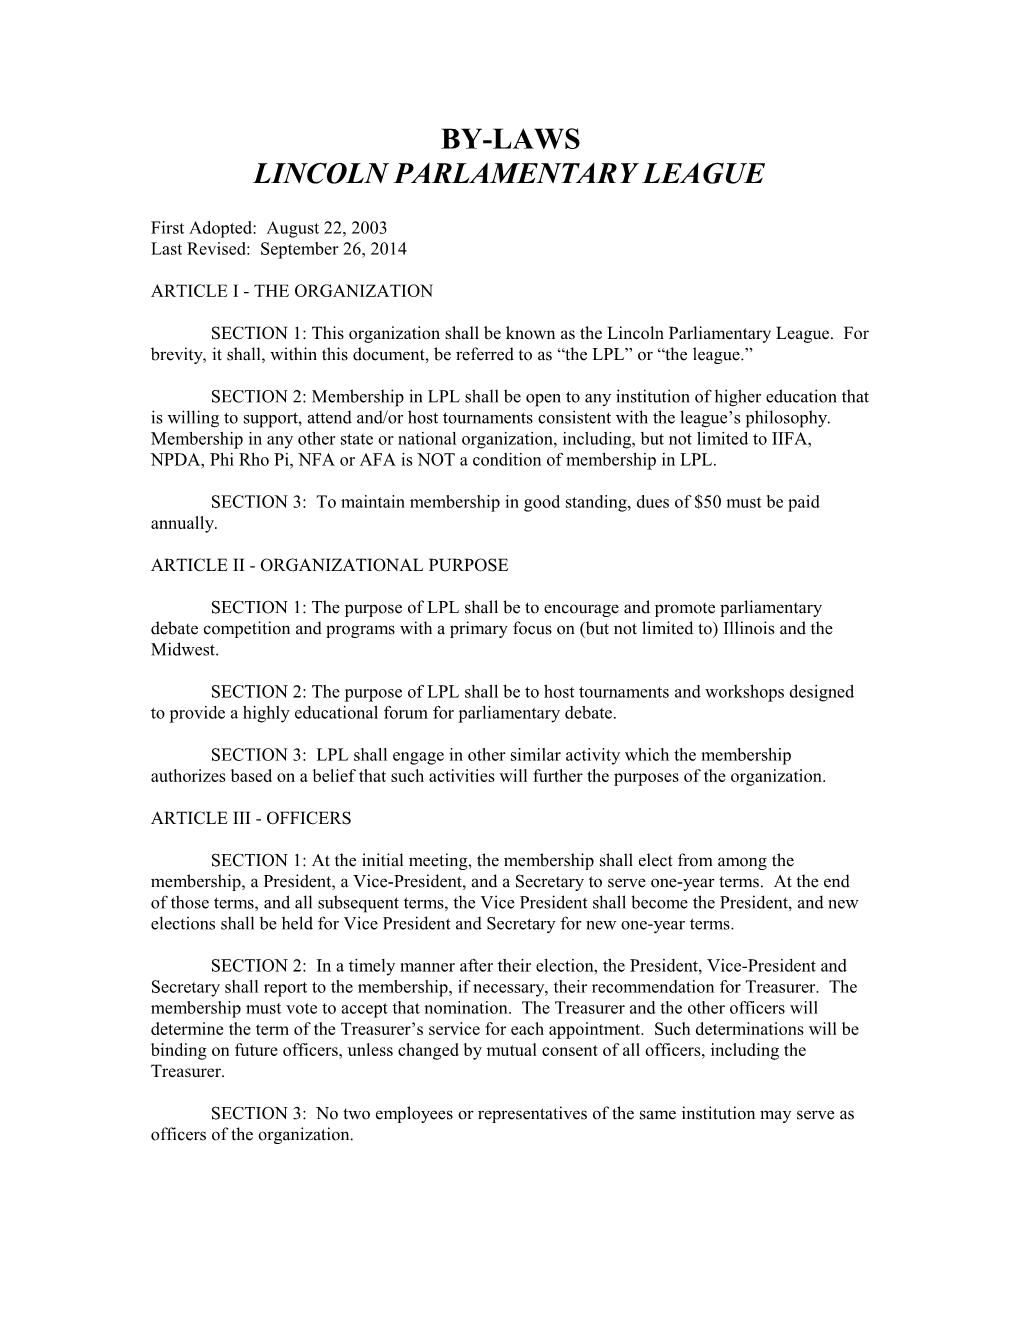 Lincoln Parlamentary League